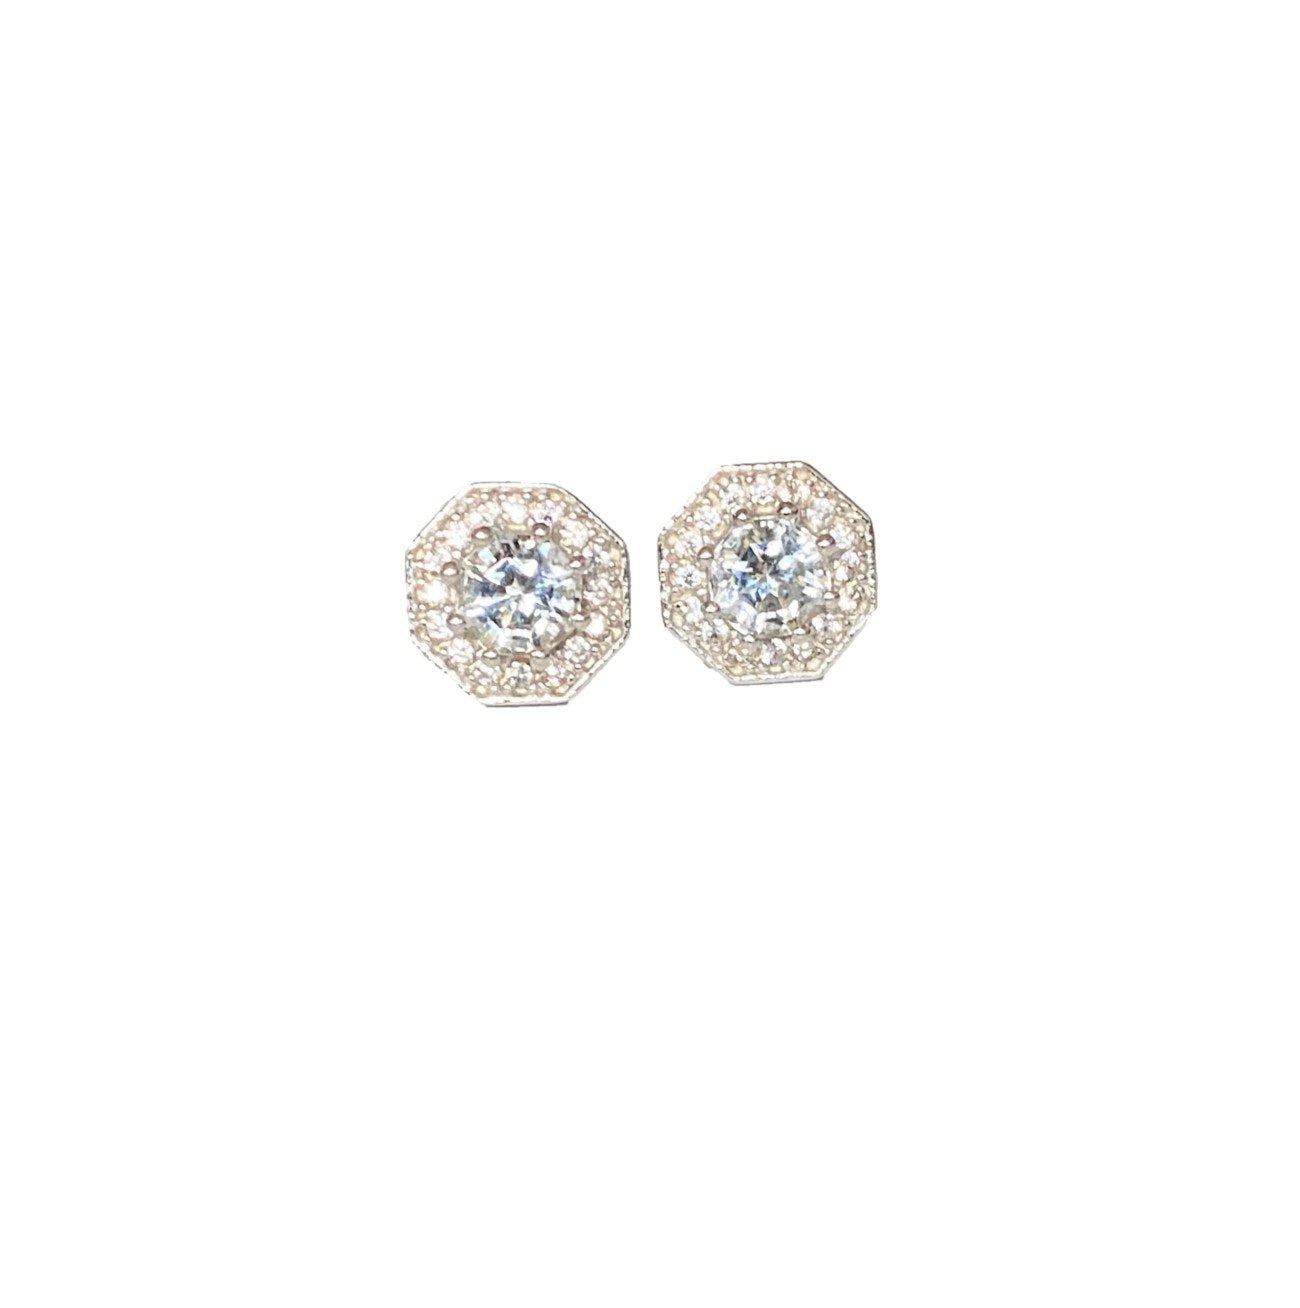 2.5ct. White Topaz & Natural White Zircon Halo Stud Earrings, Sterling Silver diamond earrings fine jewelry jewelry gift for women